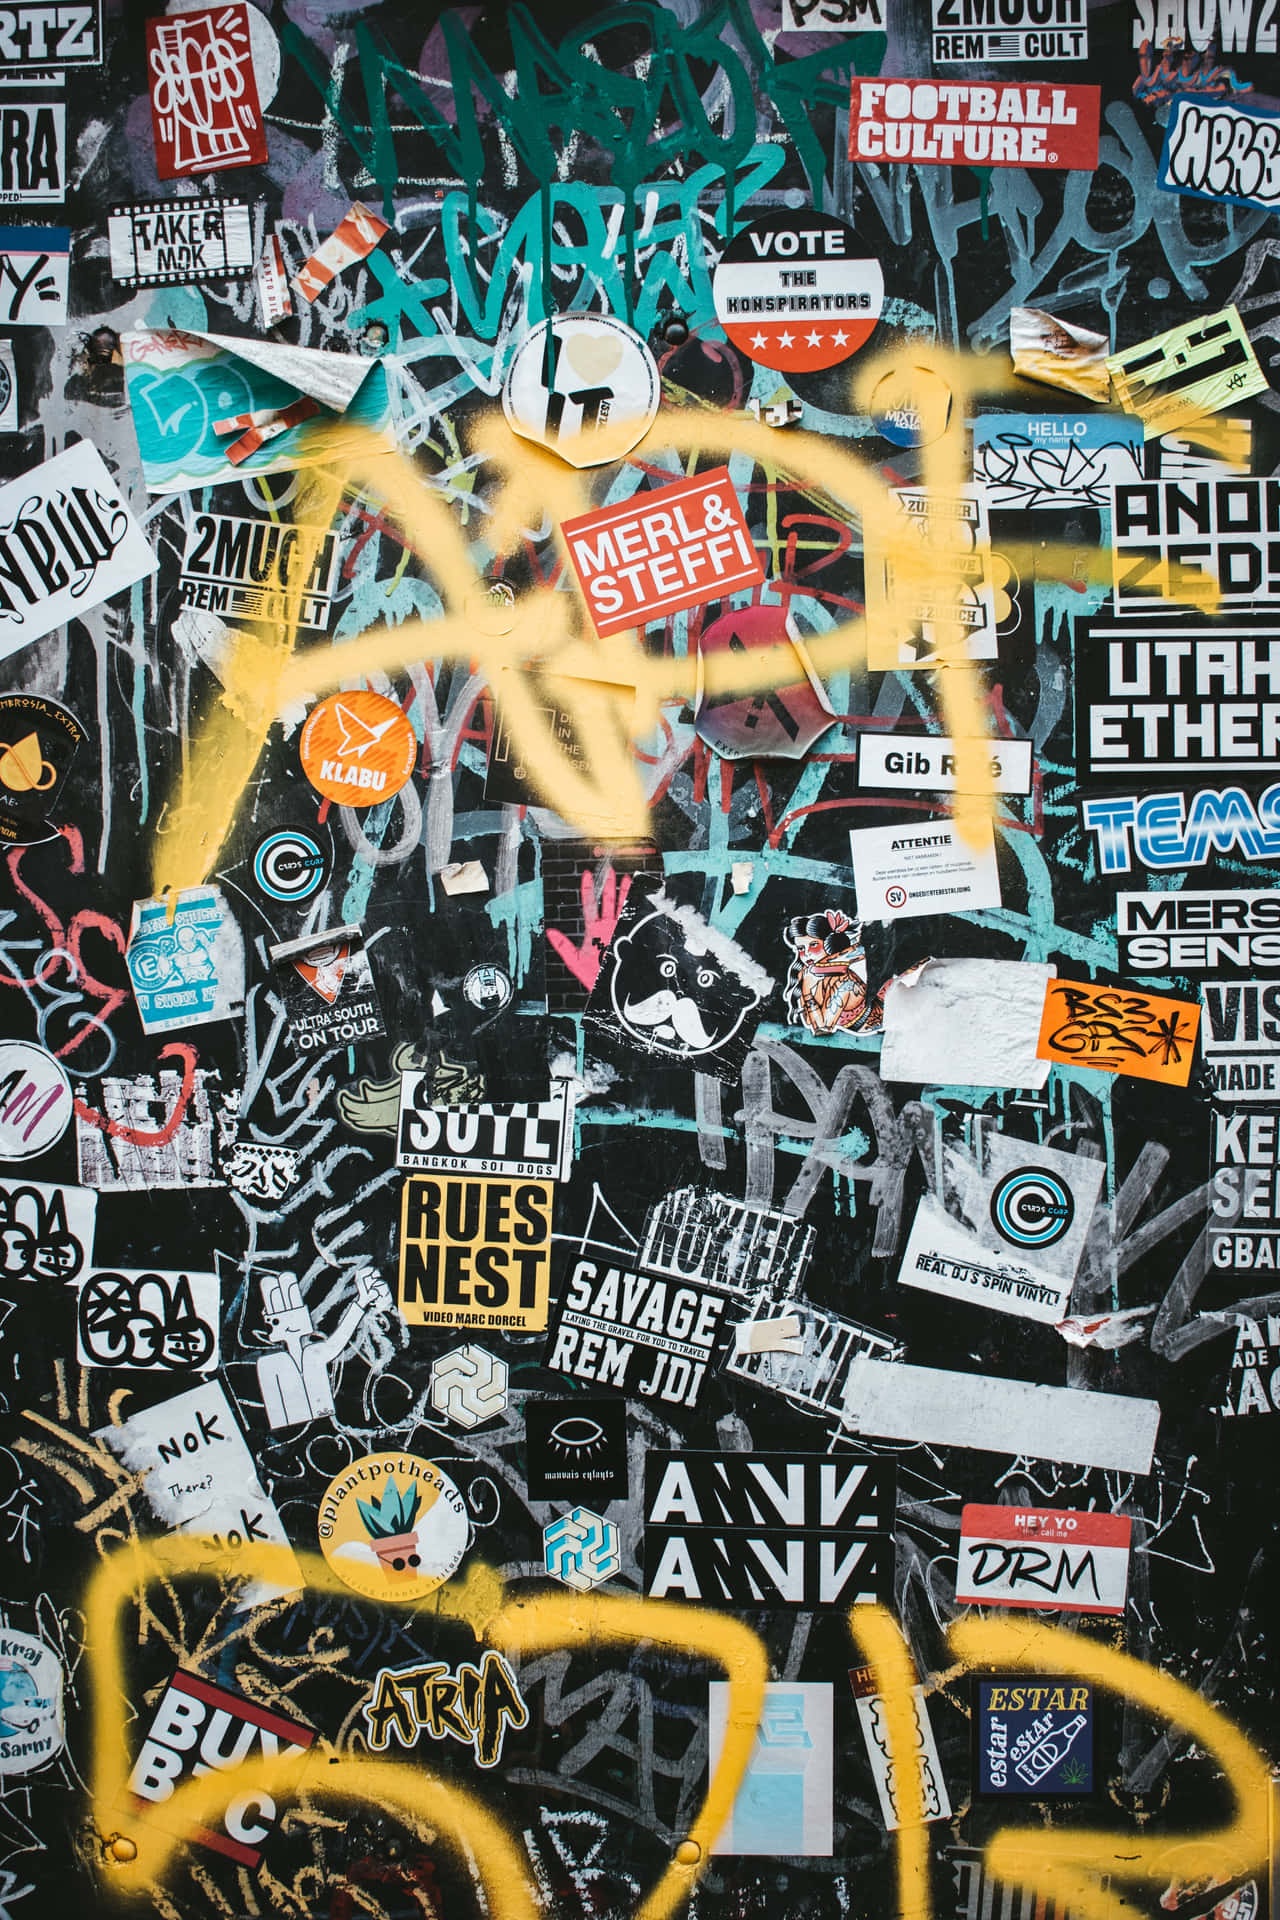 Hip Hop Graffiti Art Flourishing in City Streets Wallpaper